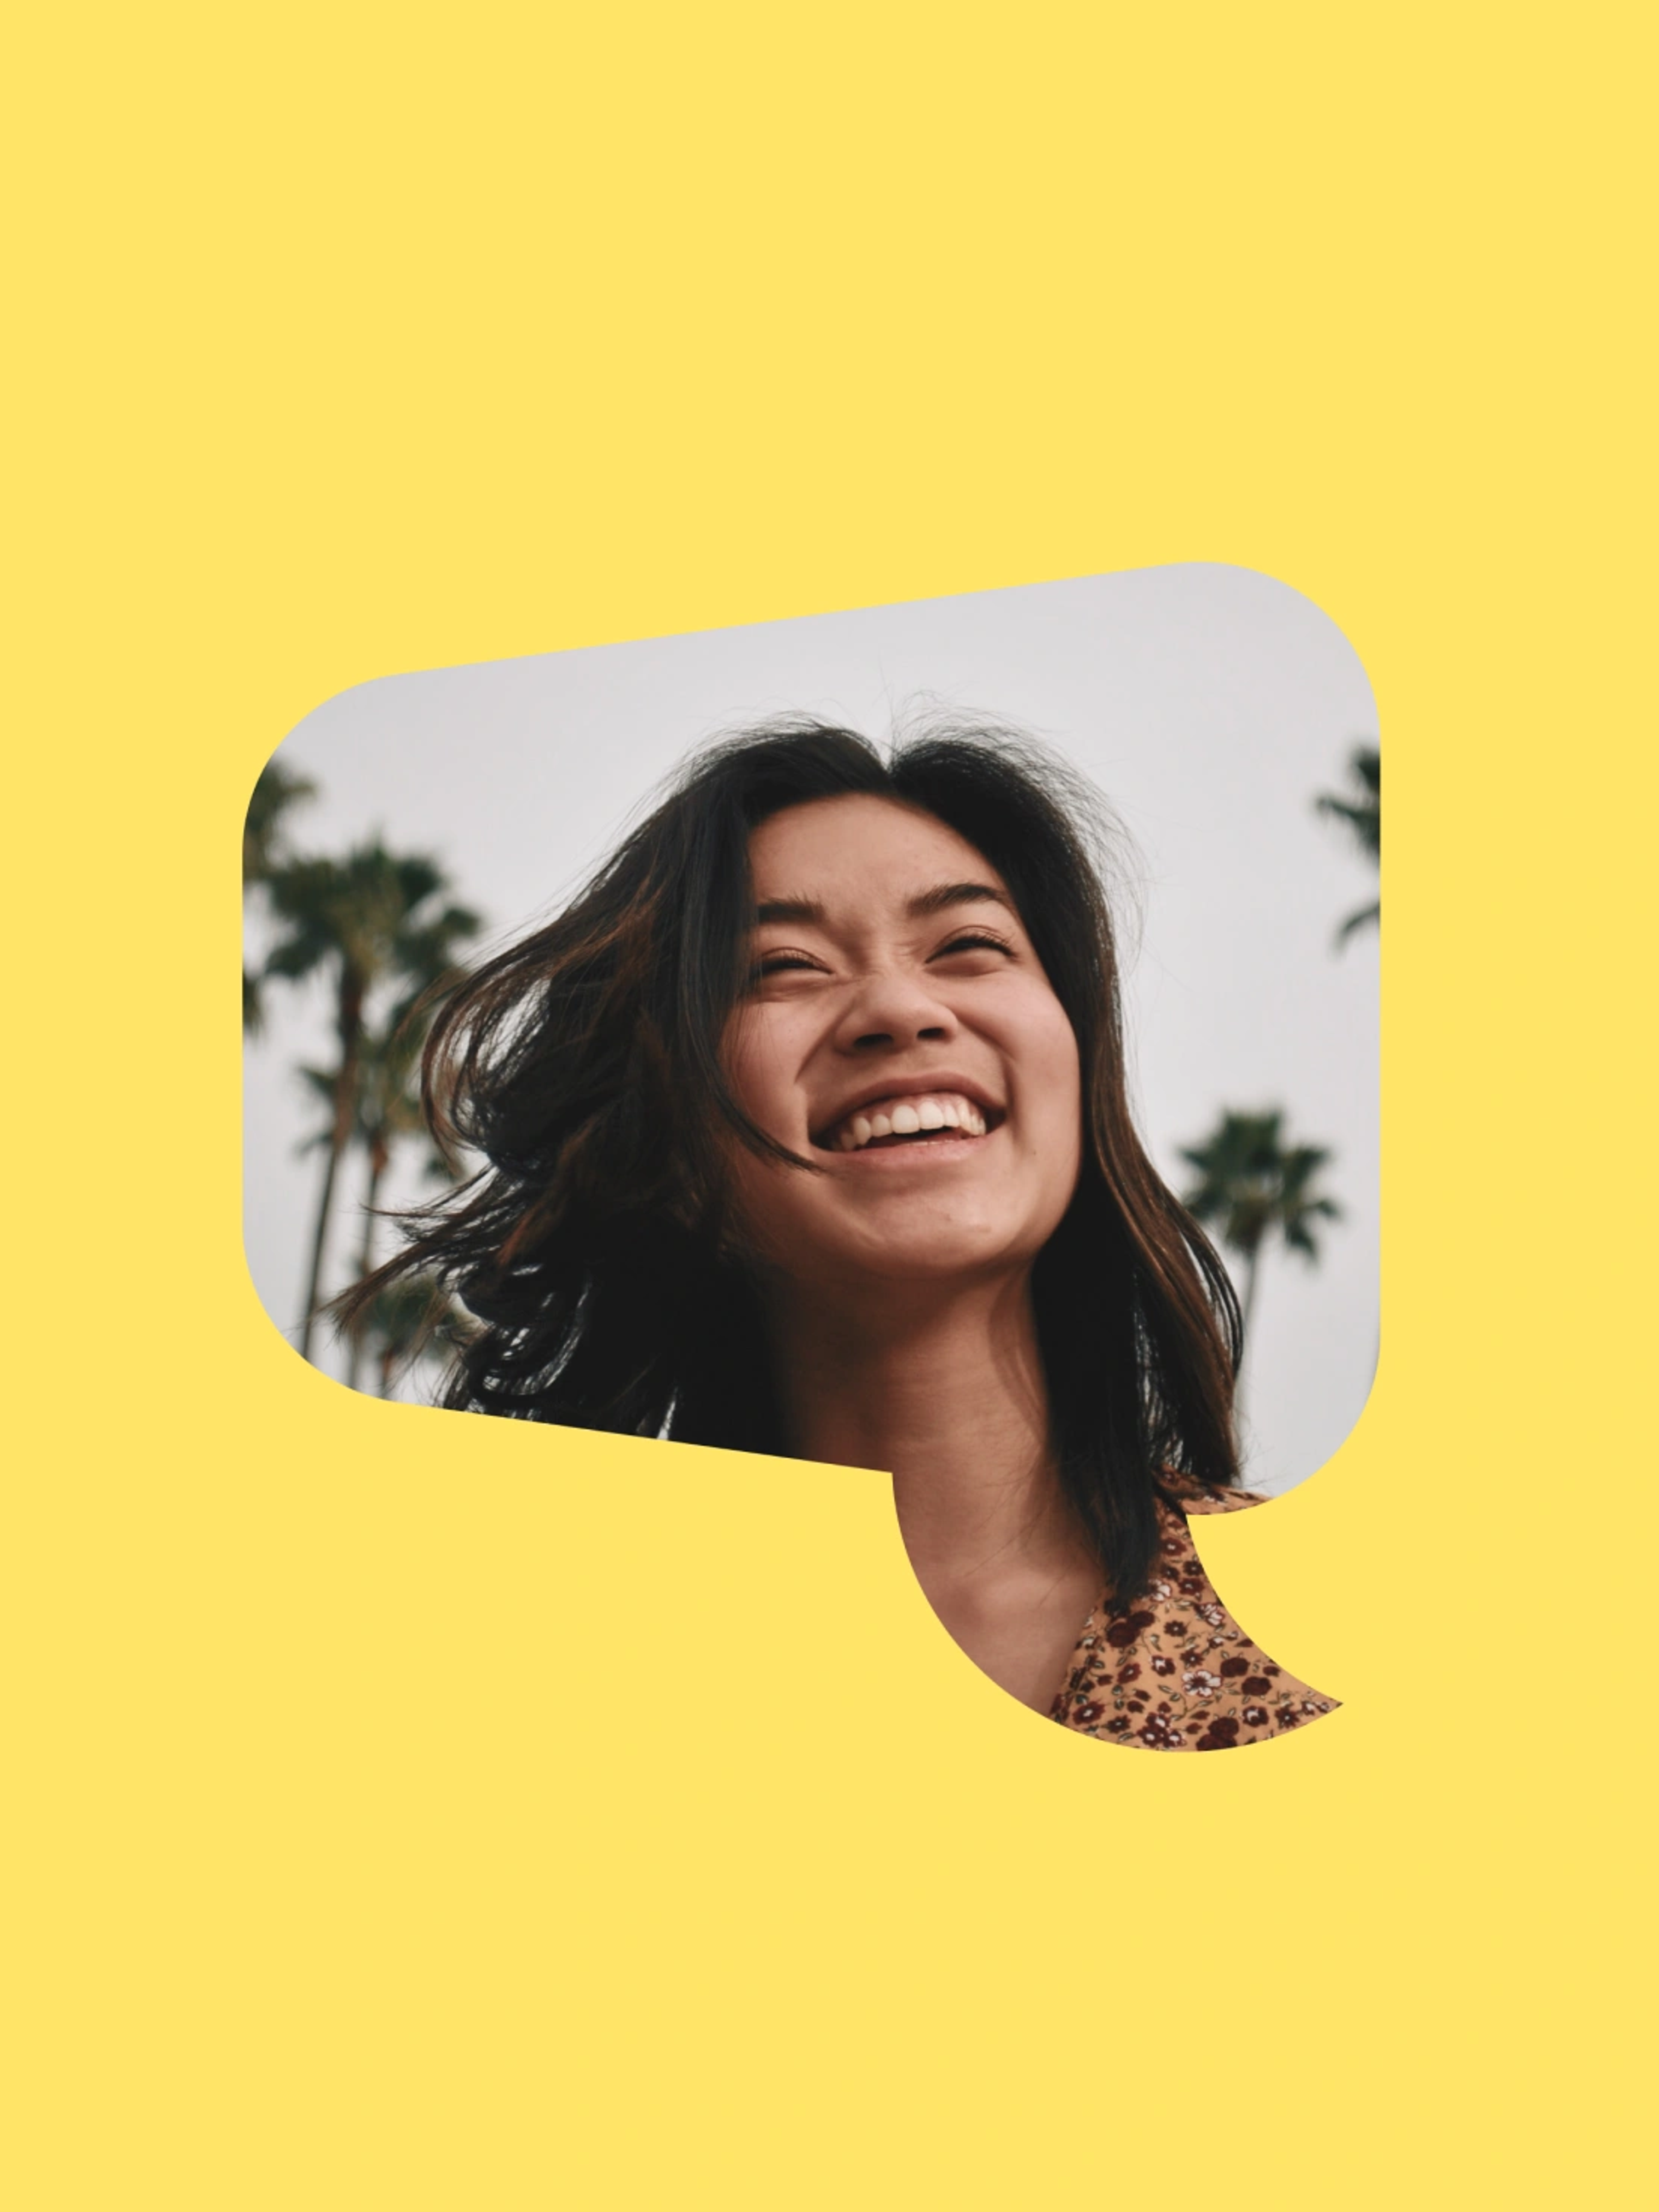 YakChat photo of woman smiling in speech bubble